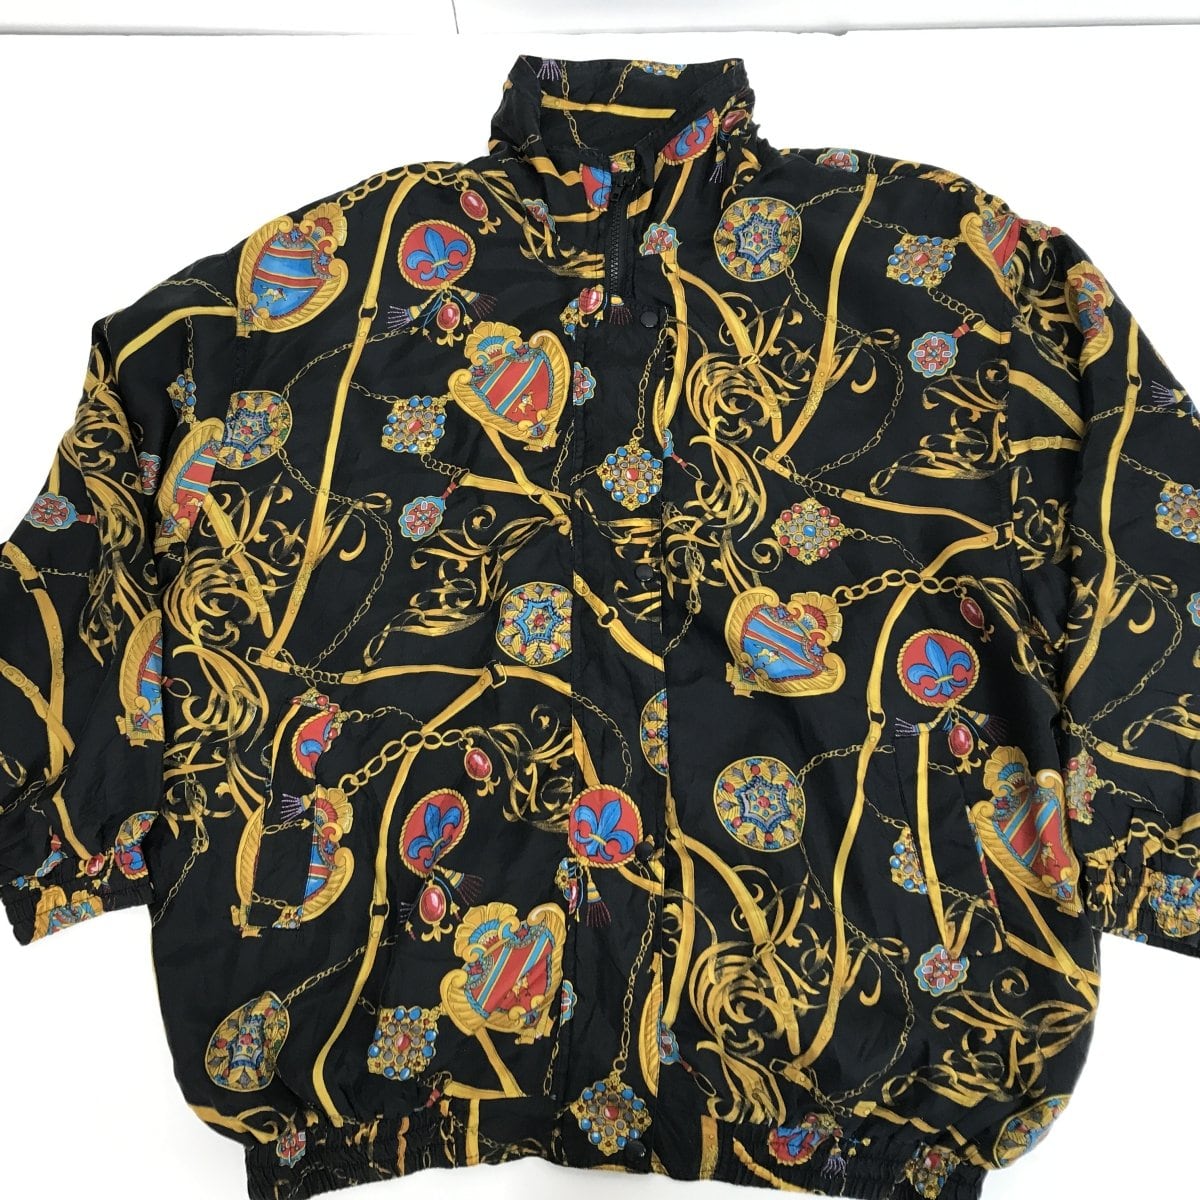 DETAILS SPORTSWEAR 80〜 90年代 総柄 スカーフ柄 シルク ジャンパー